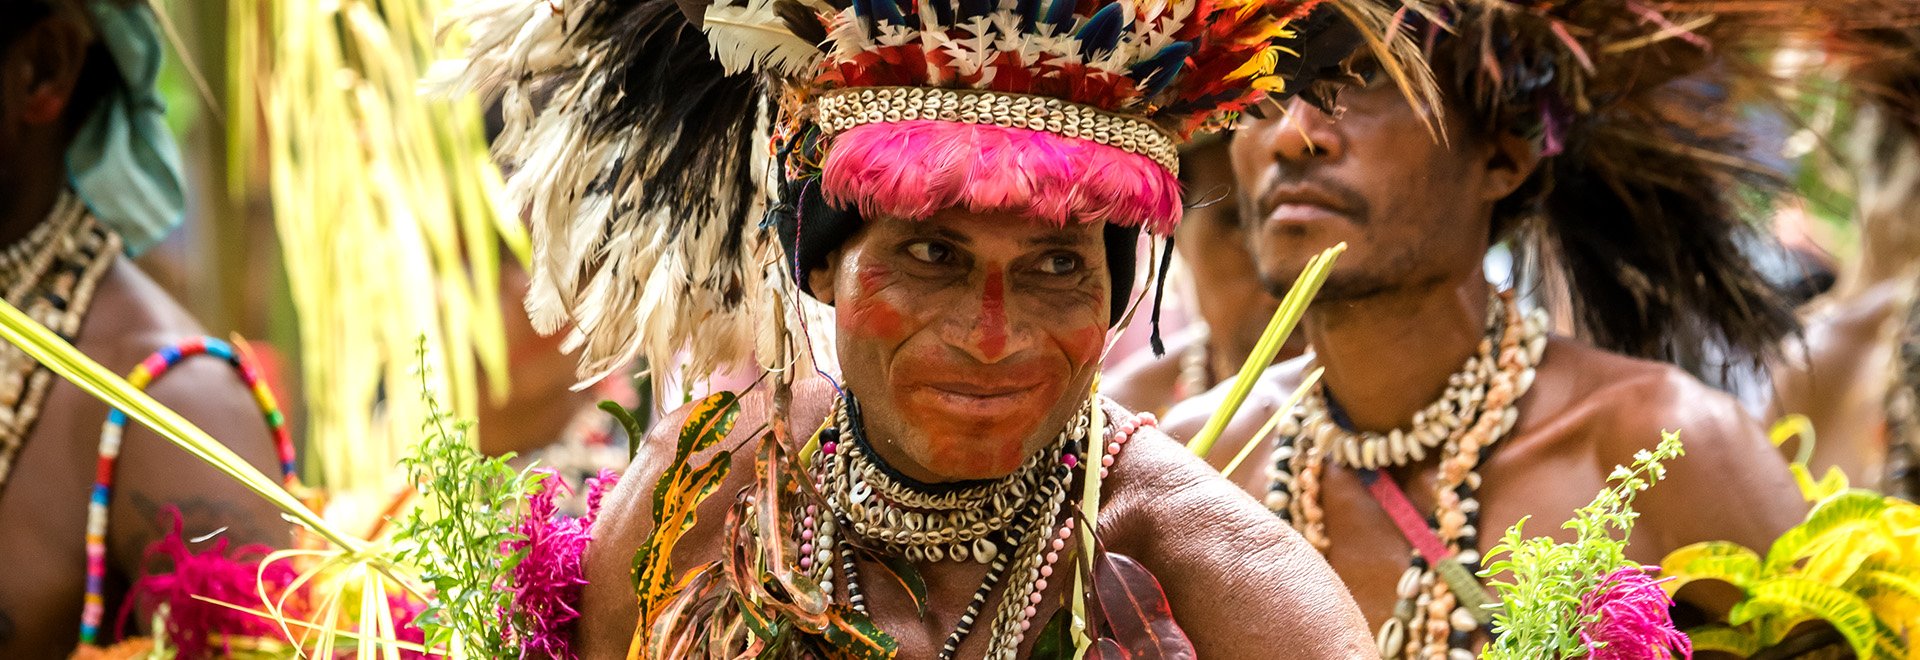 Papua New Guinea Tribesman MH